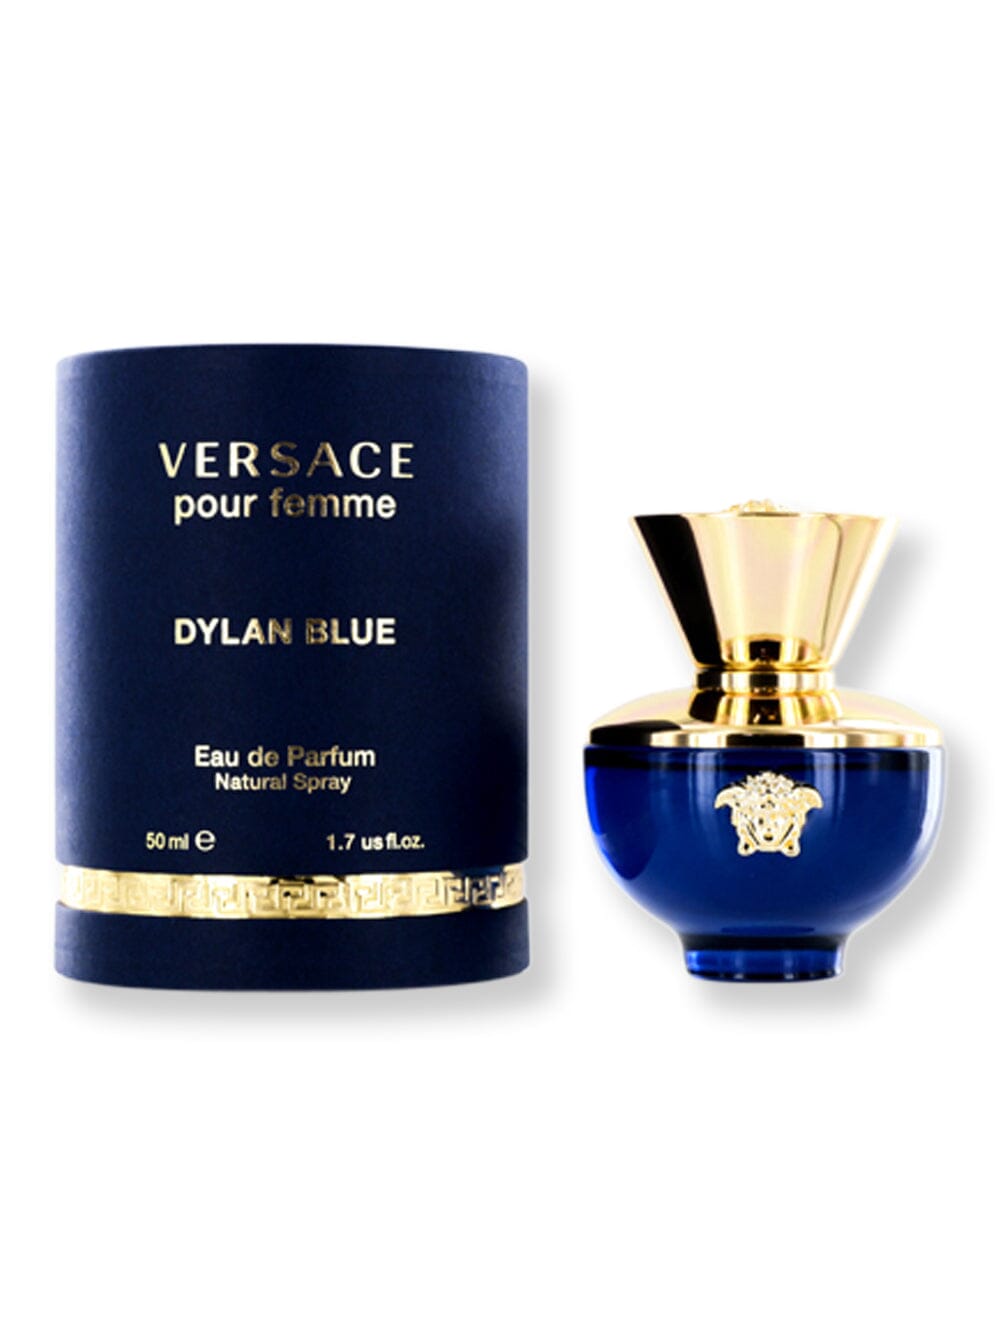 Versace Versace Dylan Blue EDP Spray 1.7 oz50 ml Perfume 